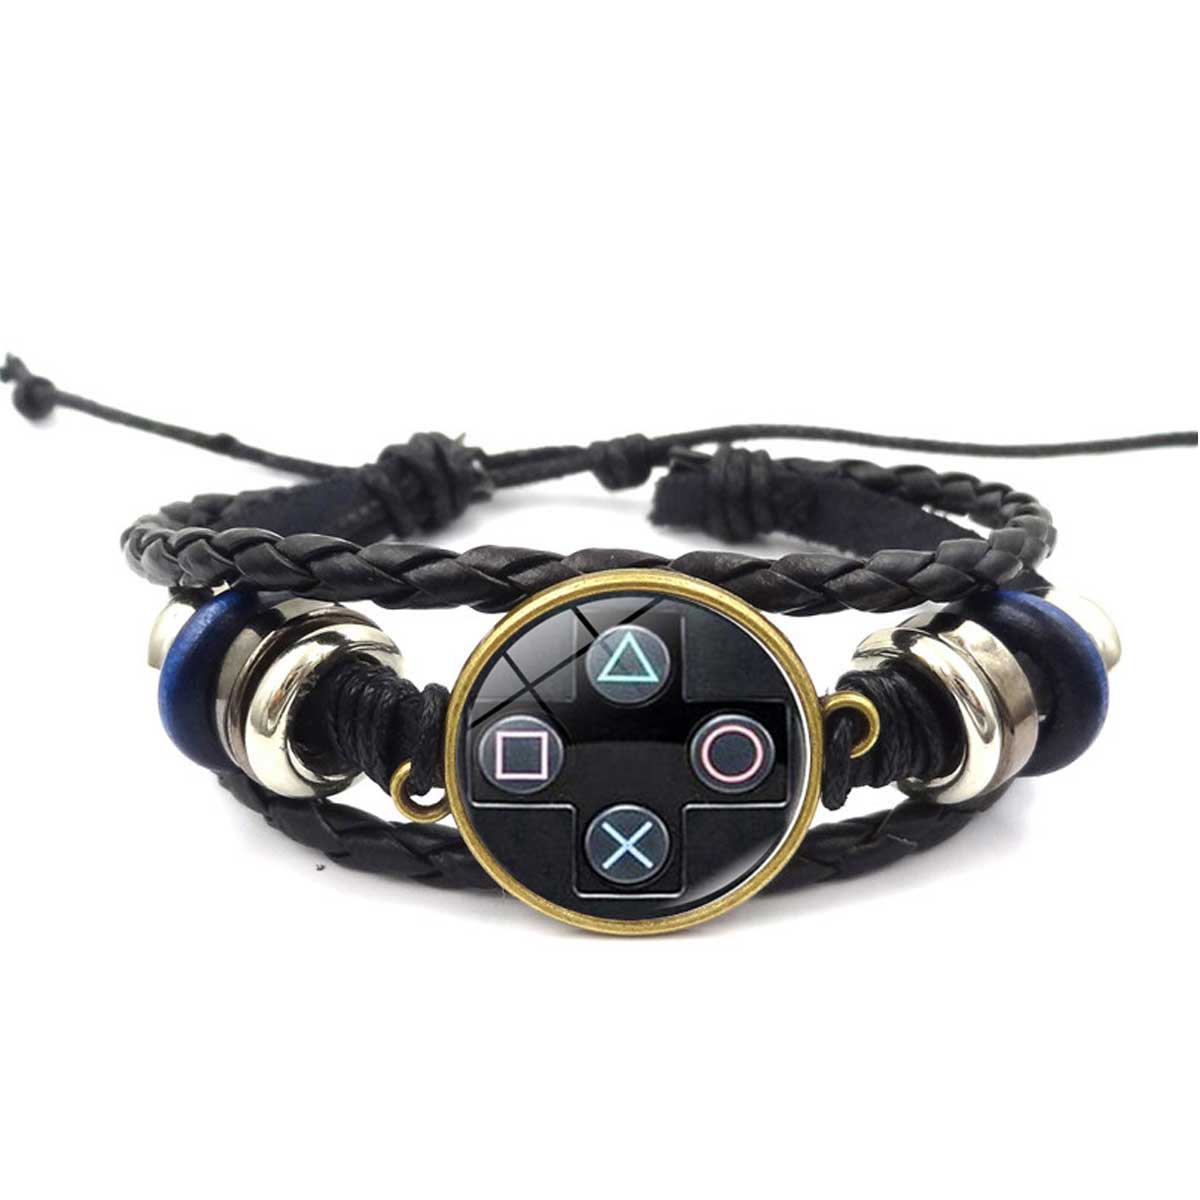 Retro Video Game Leather Bracelet